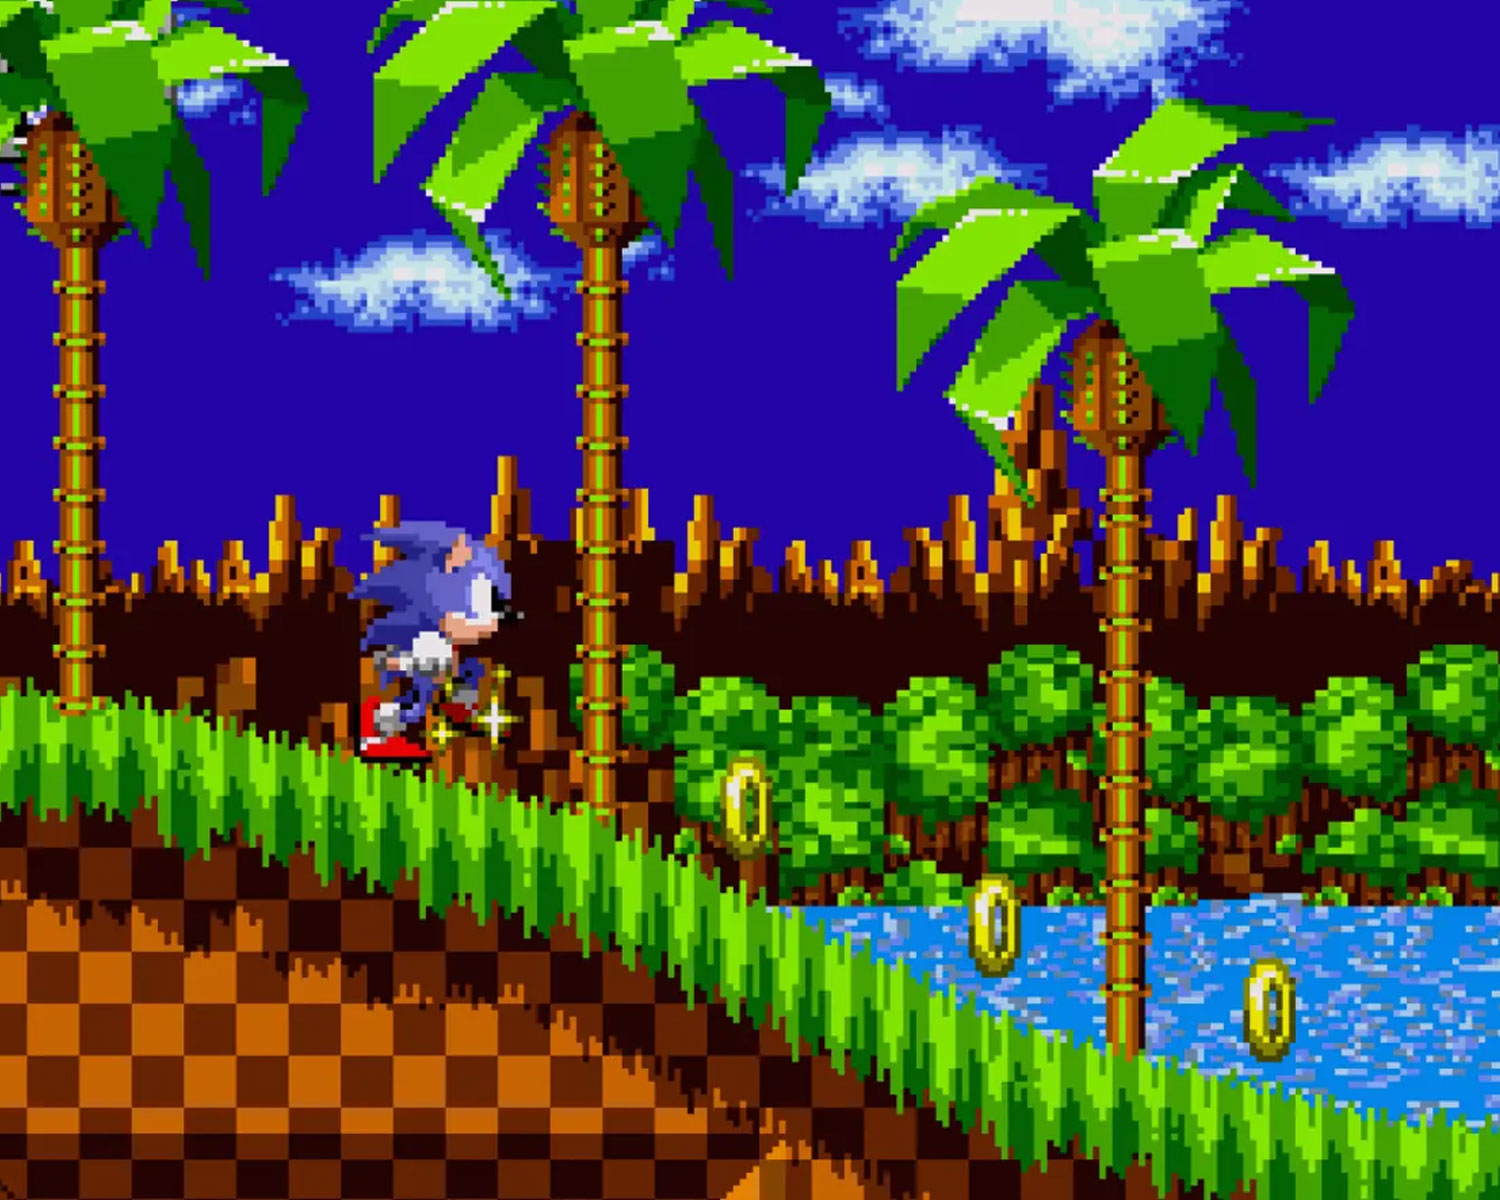 Sonic vs Super Mario, who won the 8-bit war?